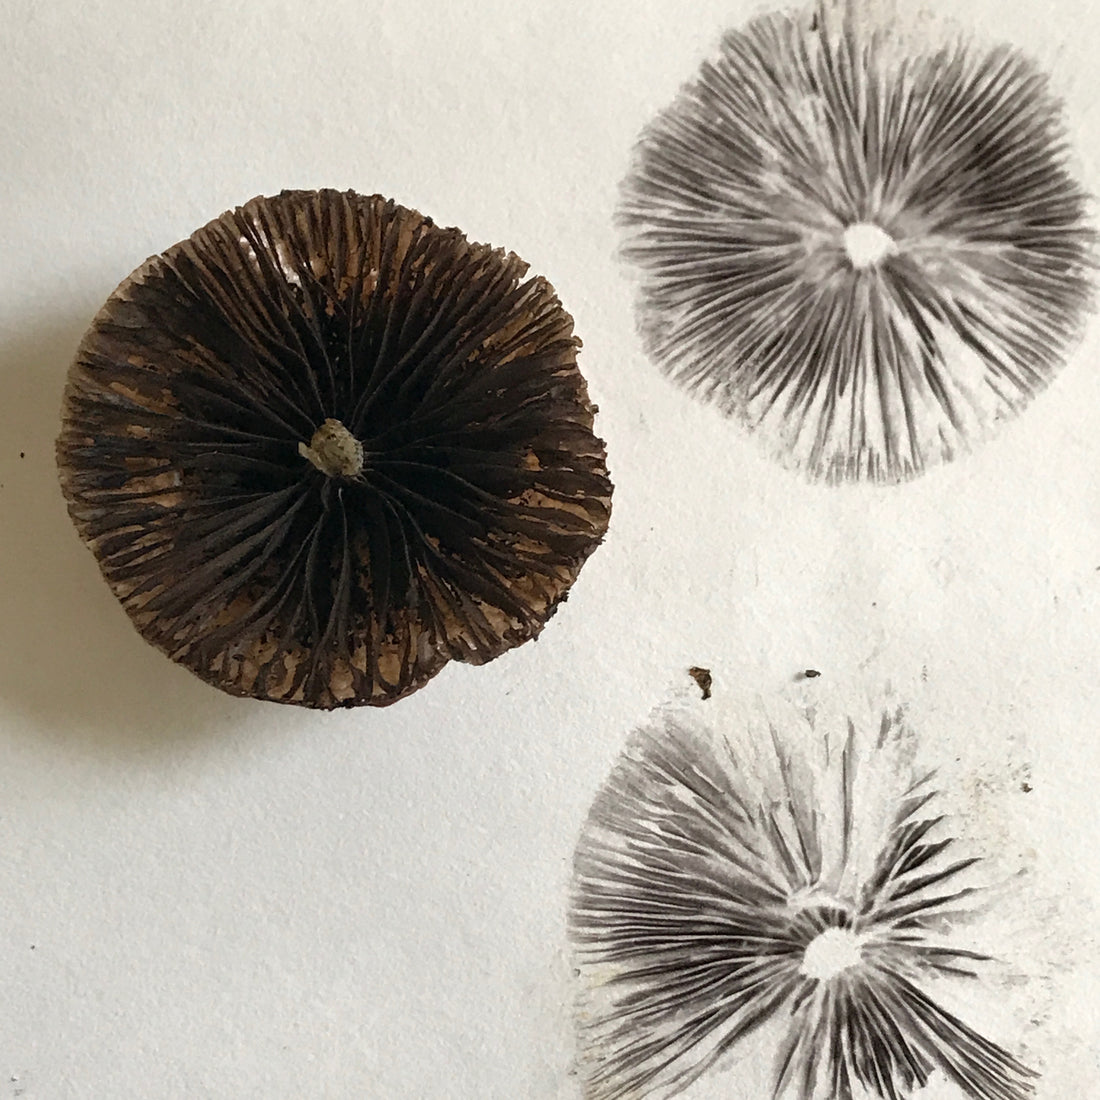 autumn activity - mushroom spore printing